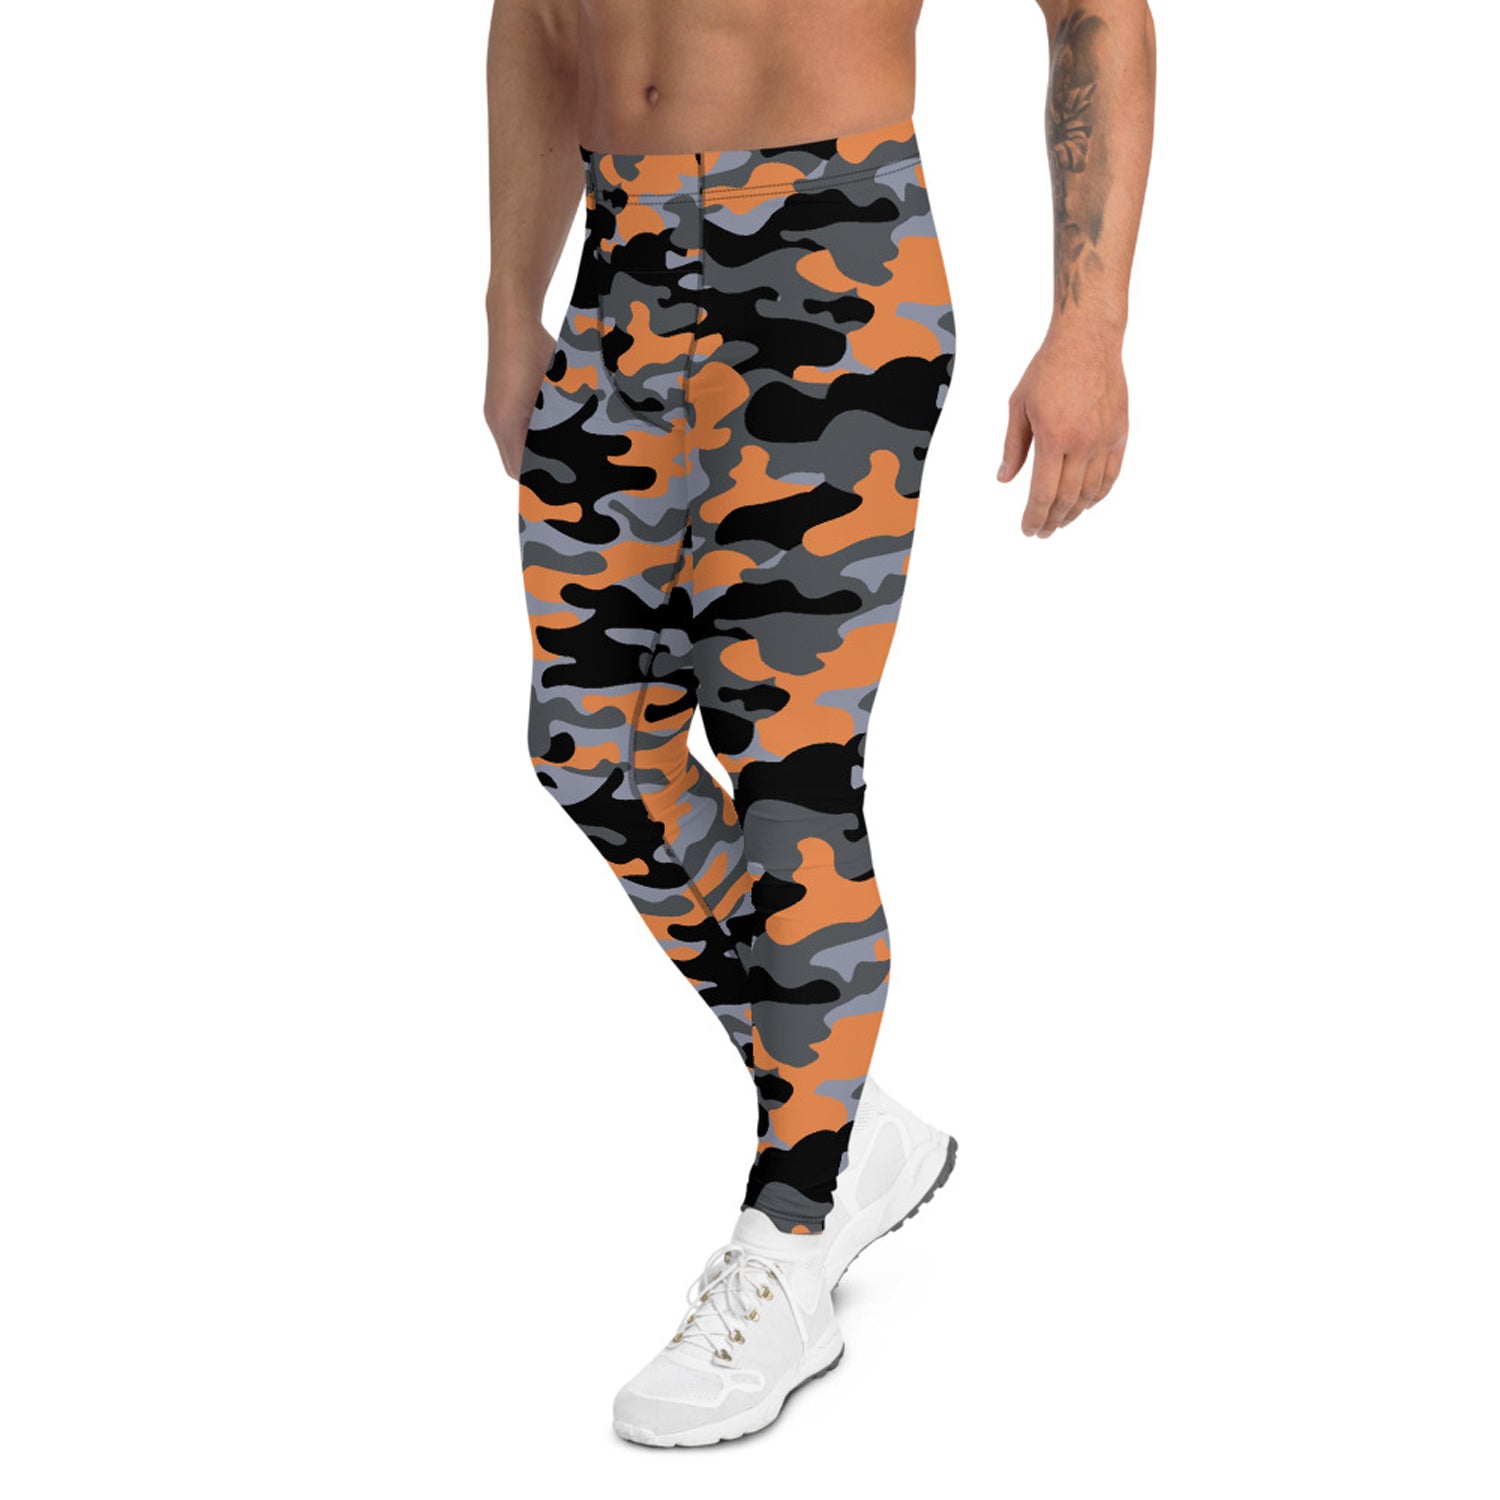 Men's gray and orange camo leggings